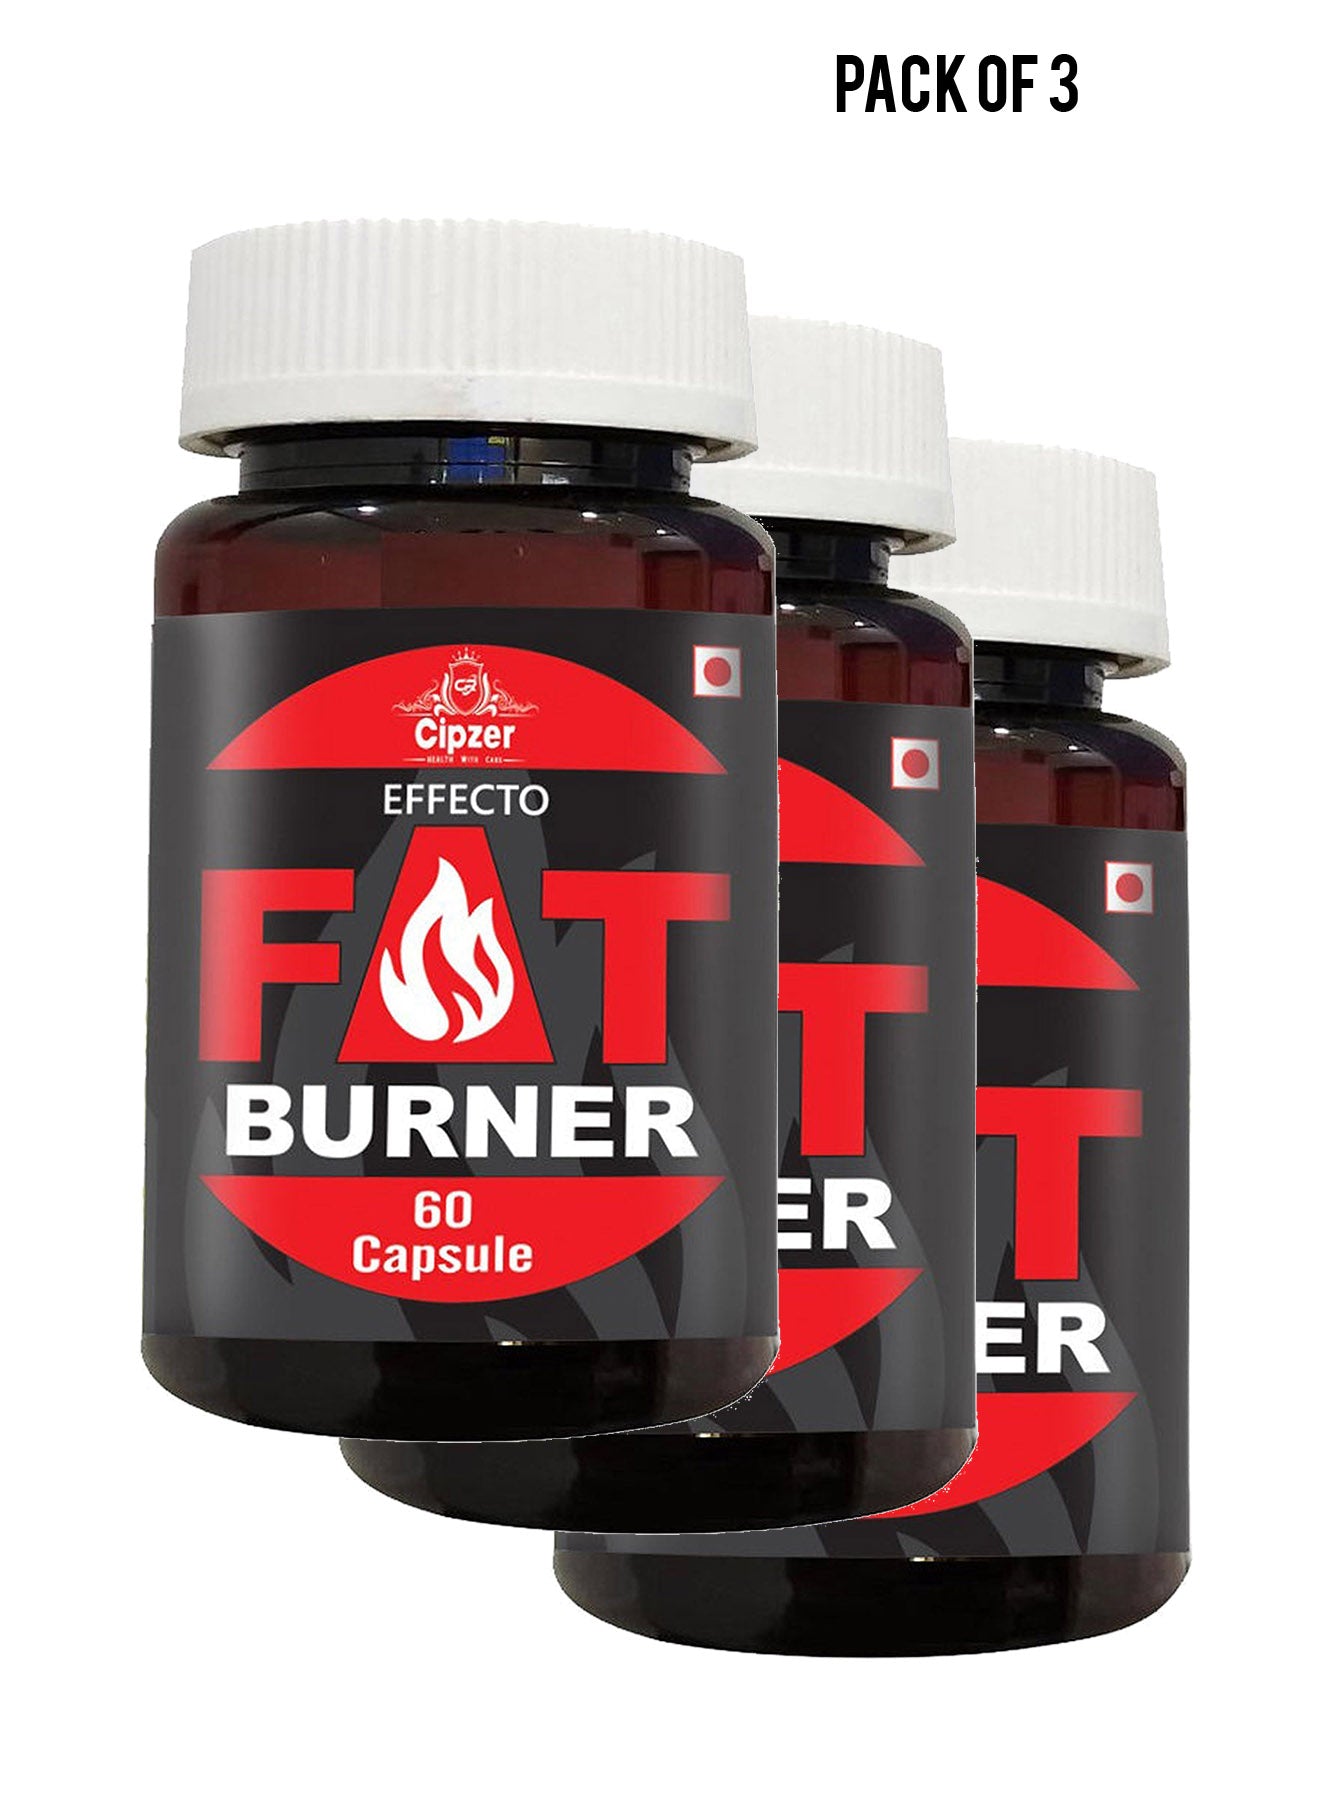 Cipzer Effecto FAT Burner 60 Capsules Value Pack of 3 